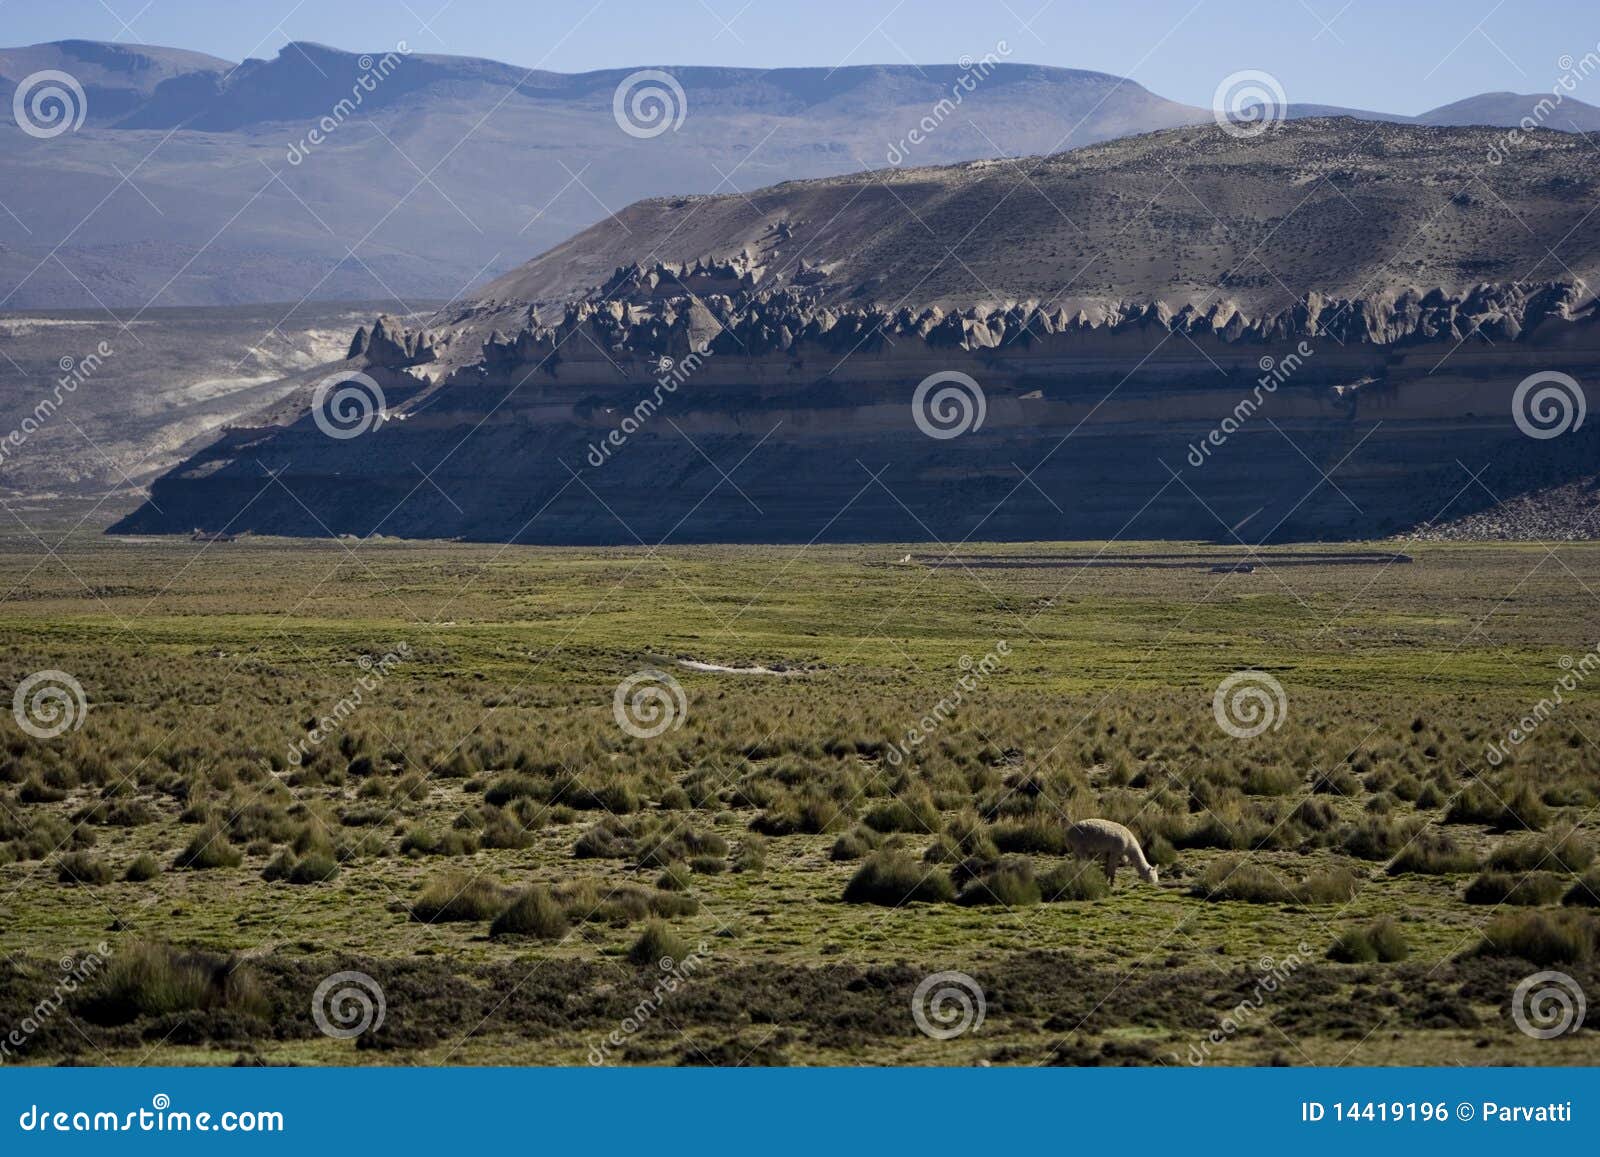 peruvian altiplano with alpaca